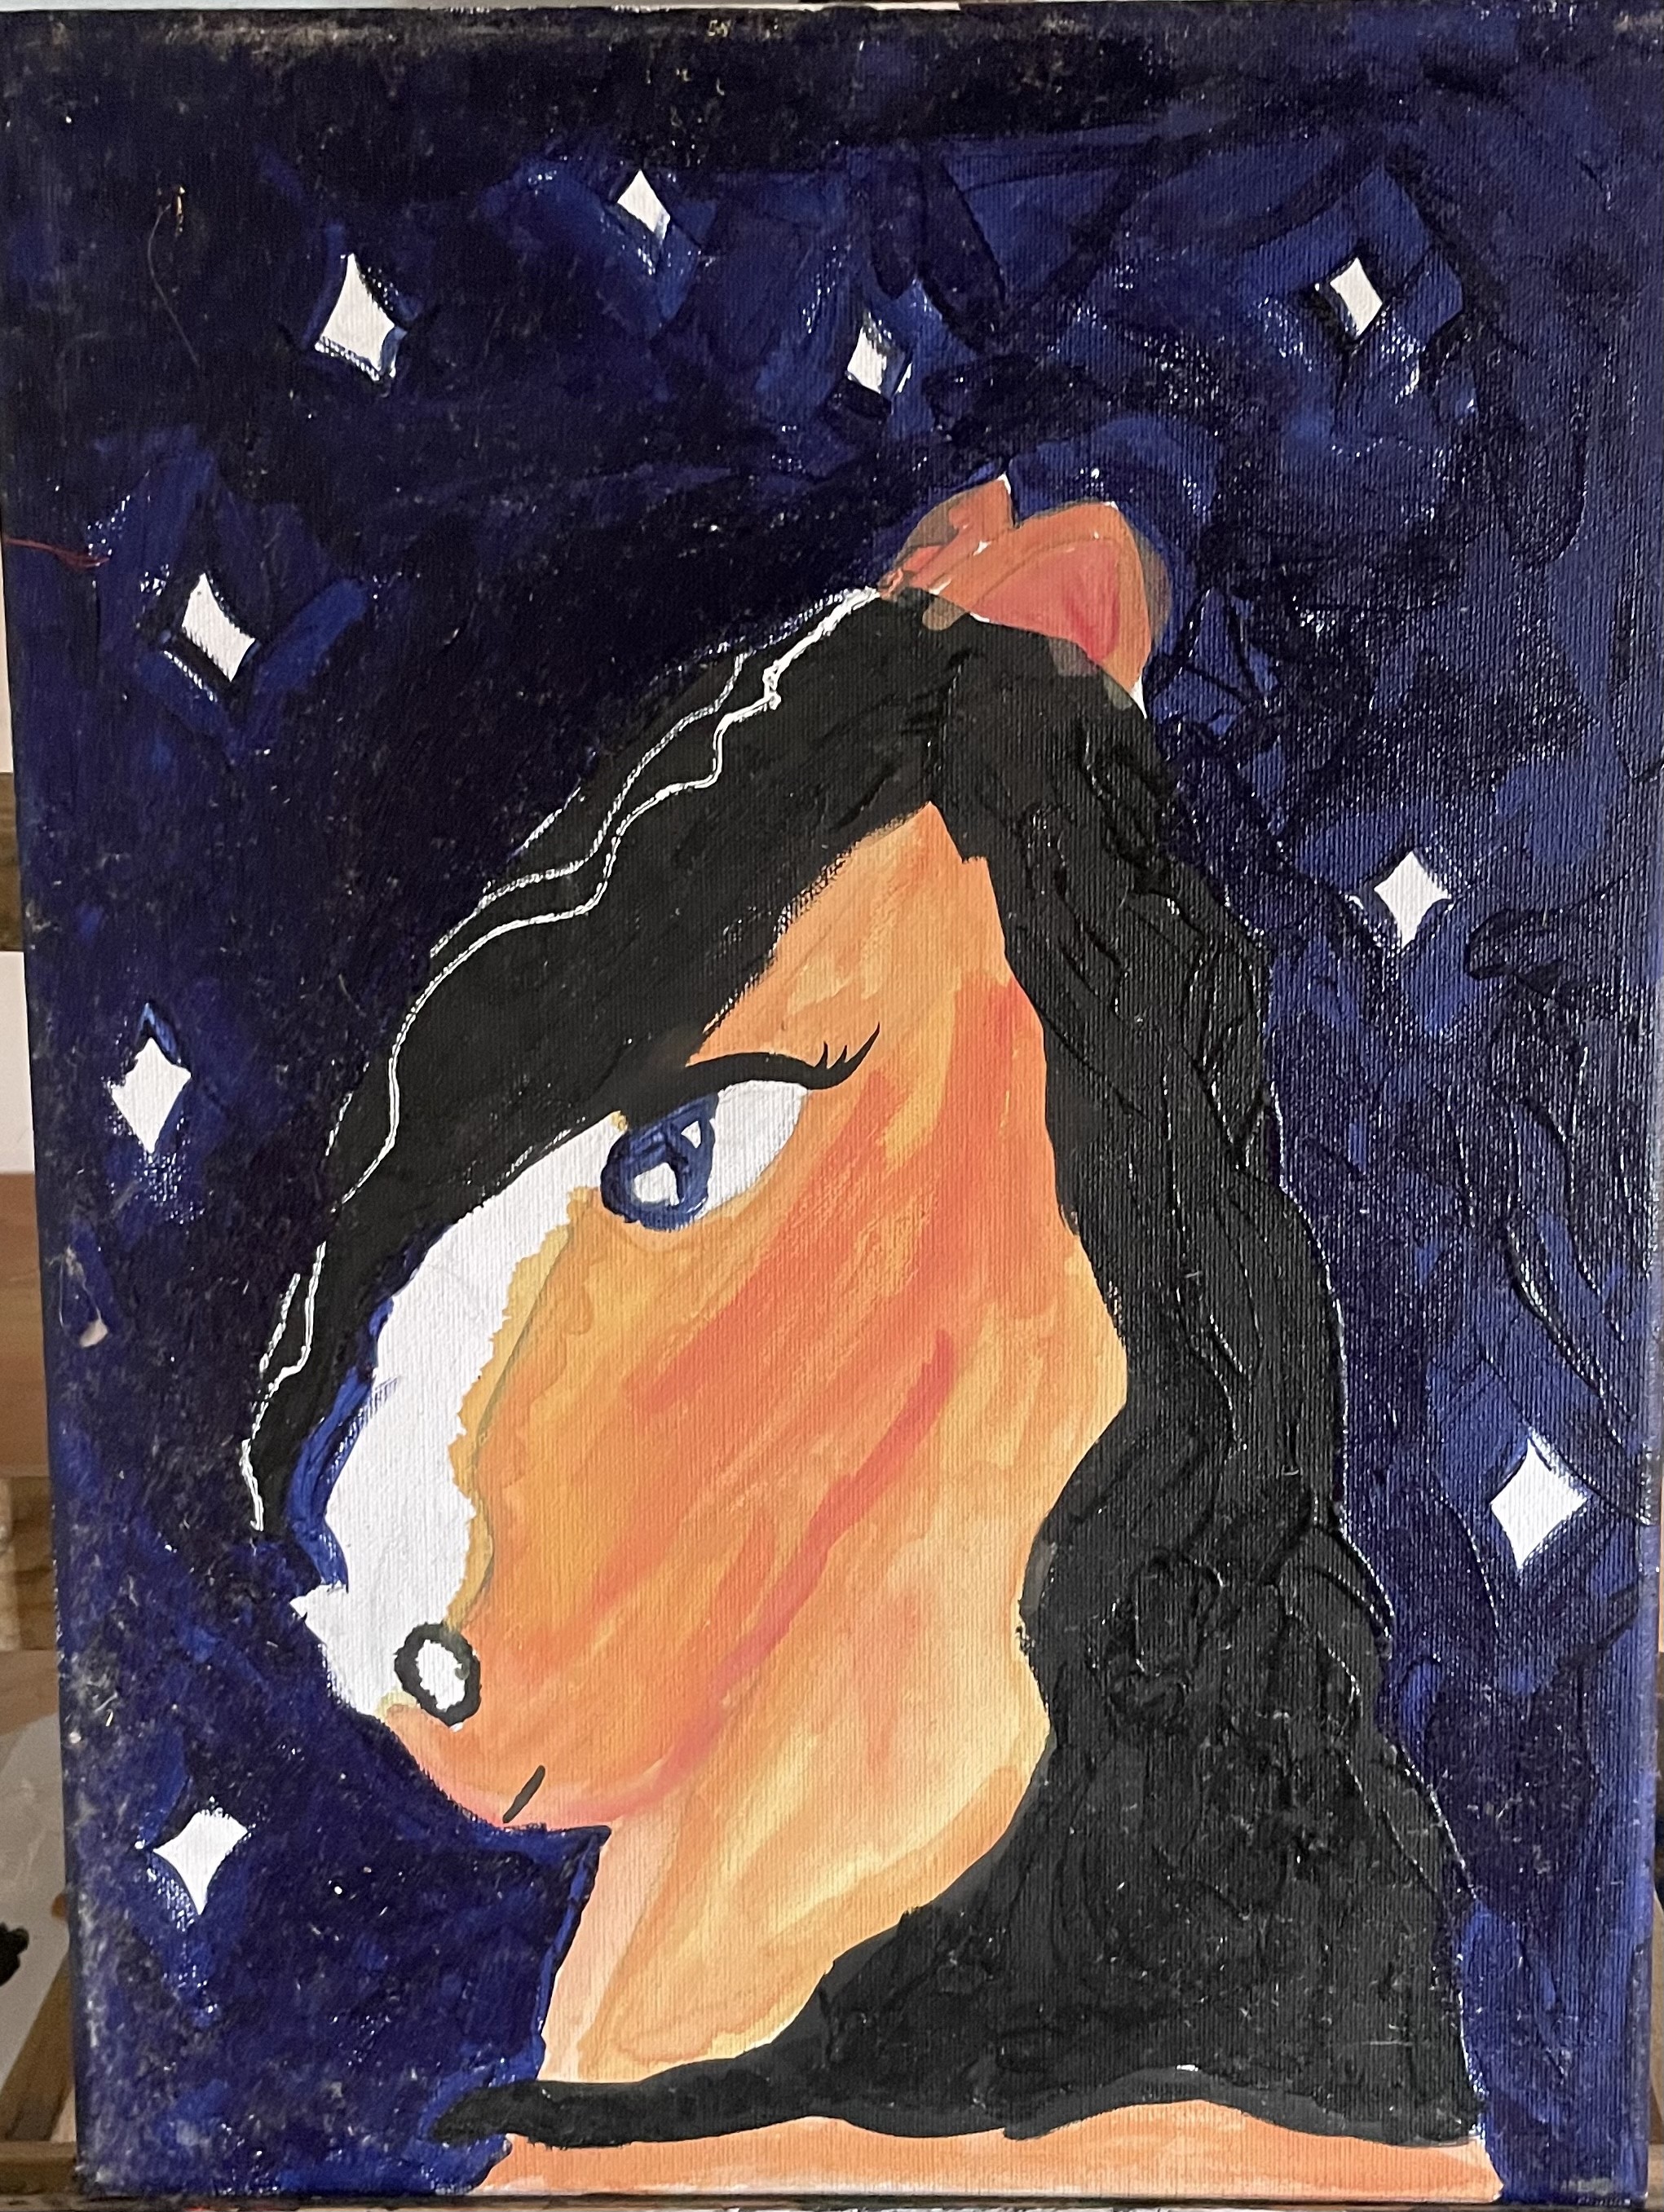 Midnight horse by Tara Samarasinghe